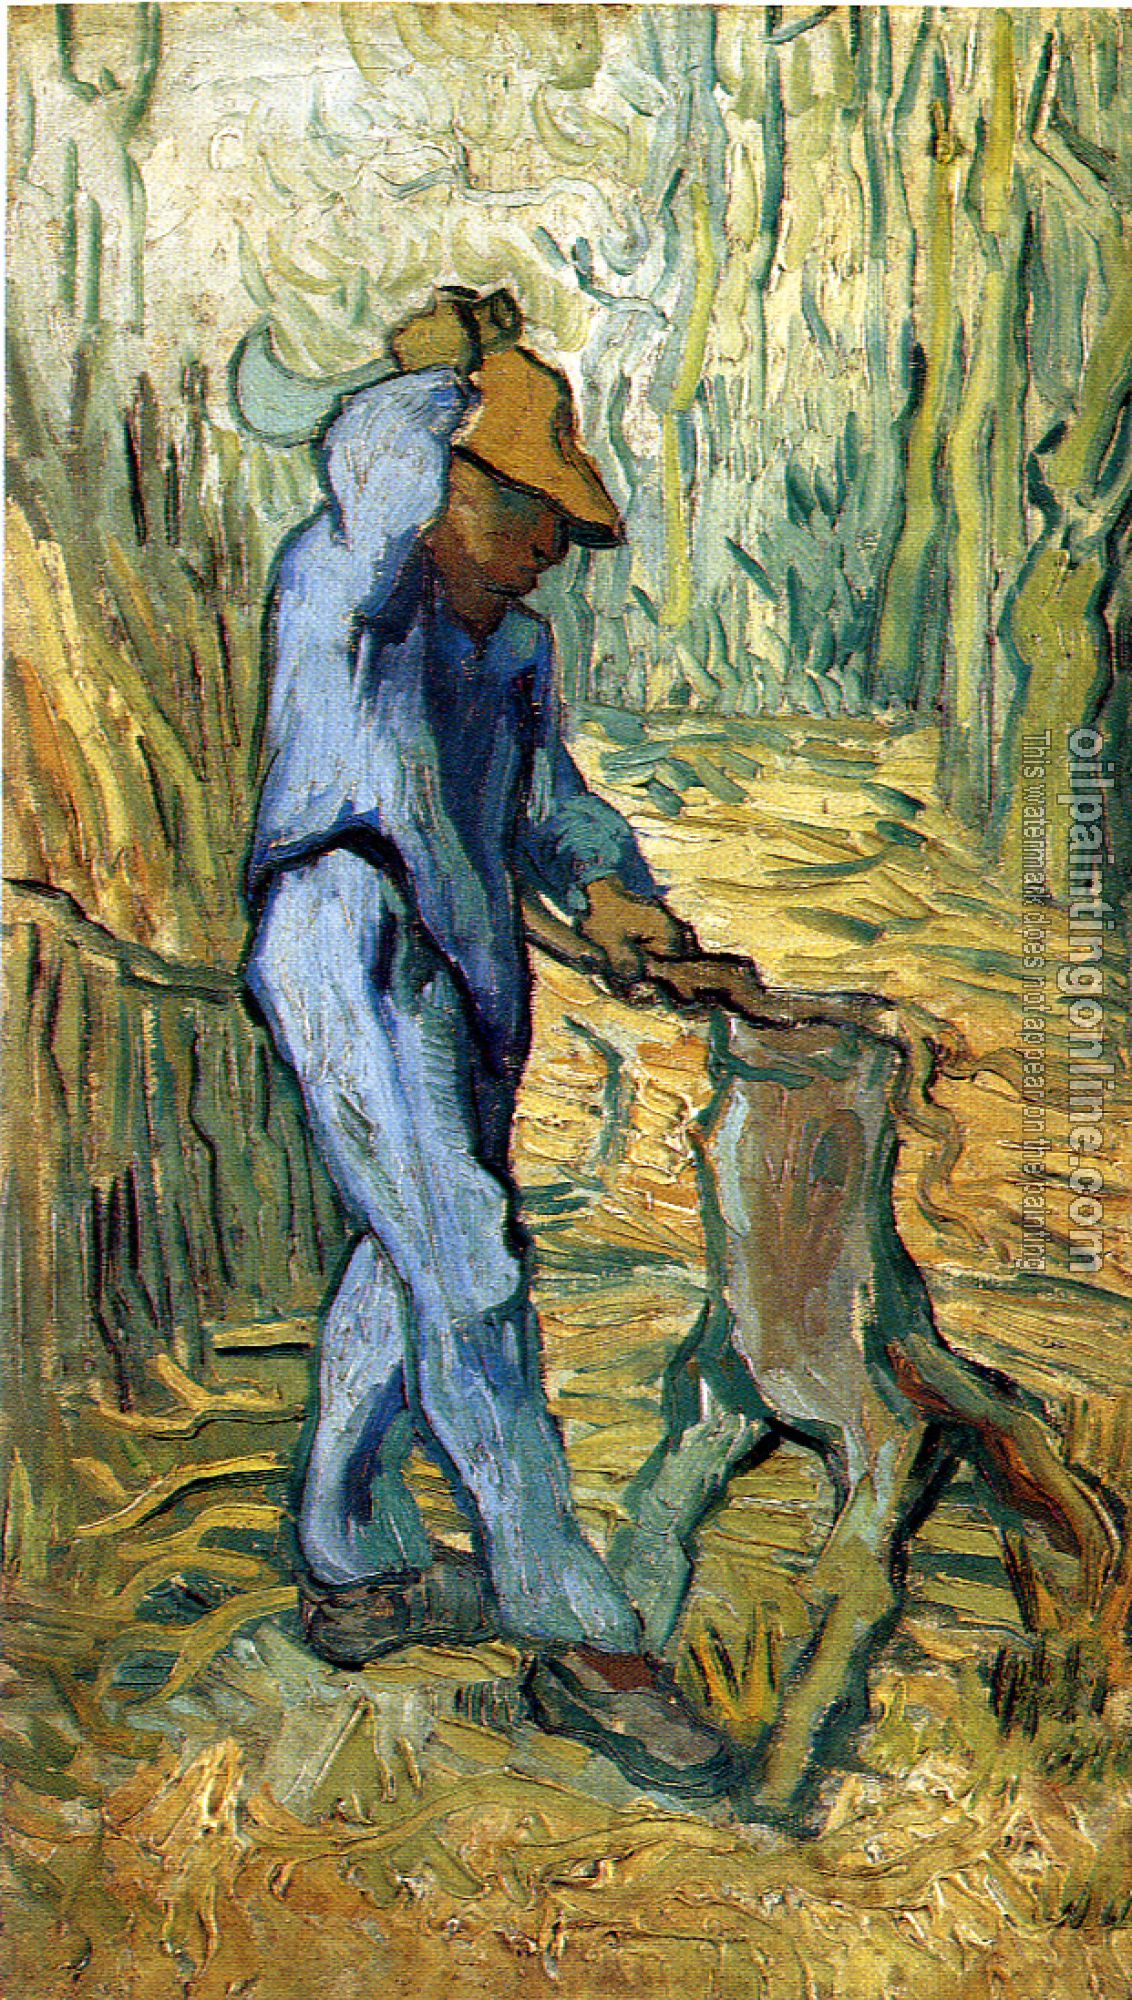 Gogh, Vincent van - The Woodcutter(after Millet)